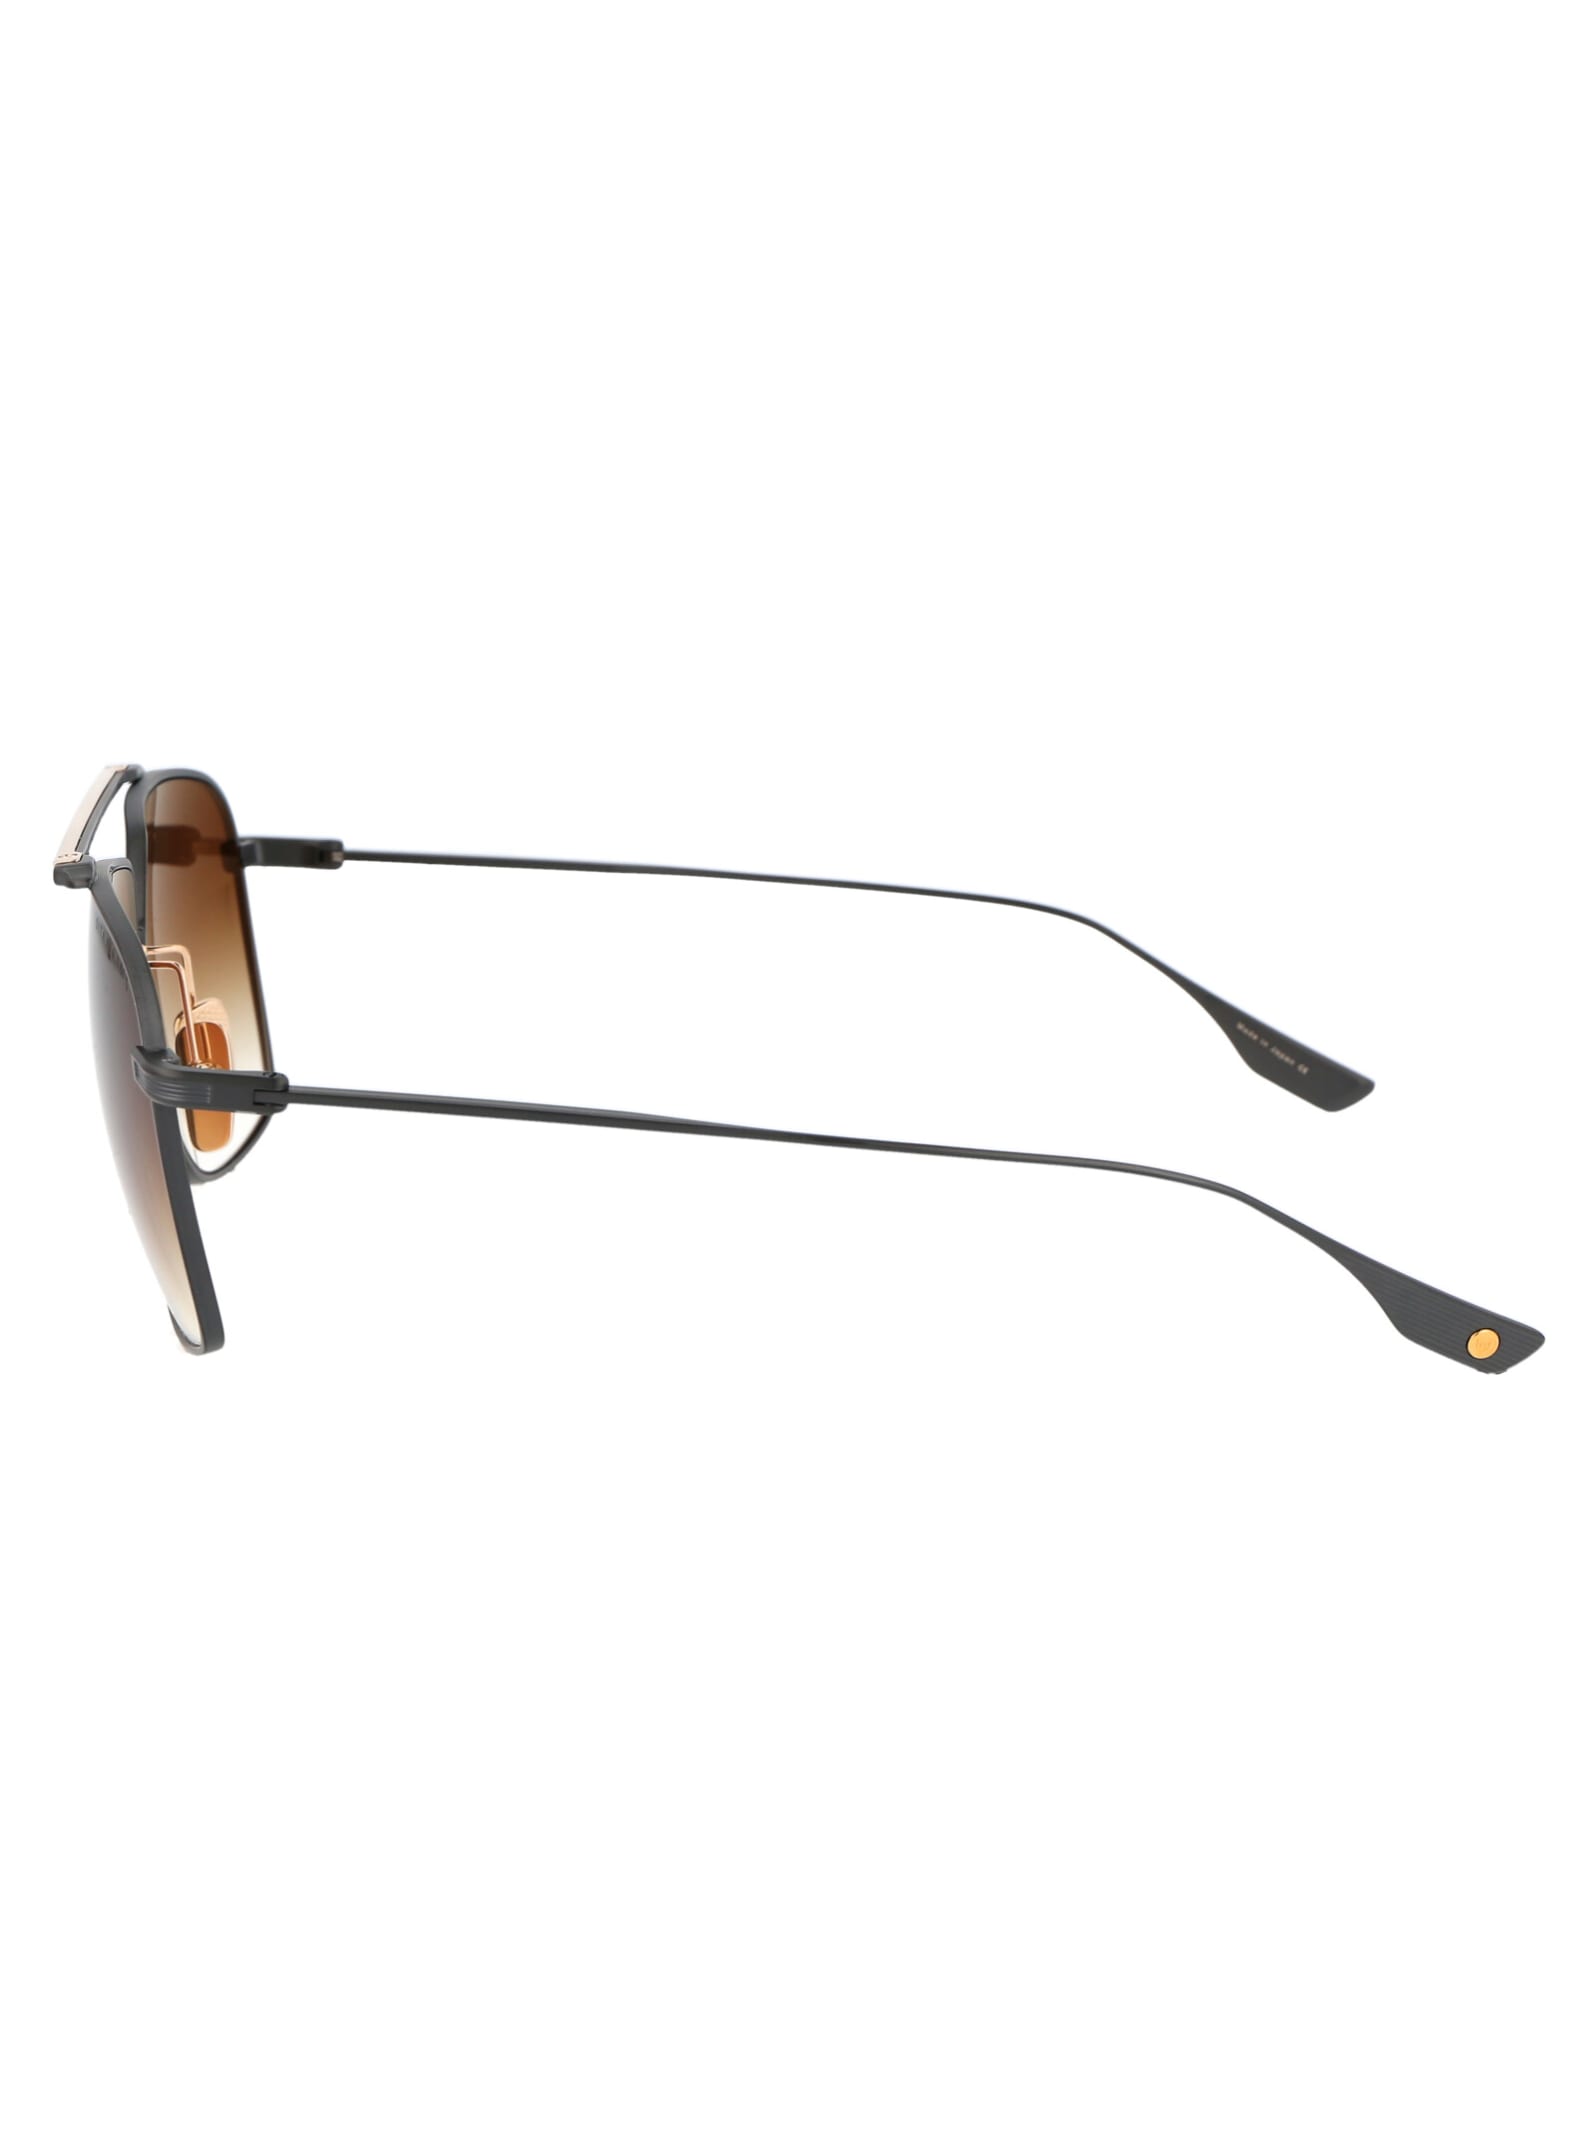 Shop Dita Alkamx Sunglasses In Black Iron - White Gold Gradient